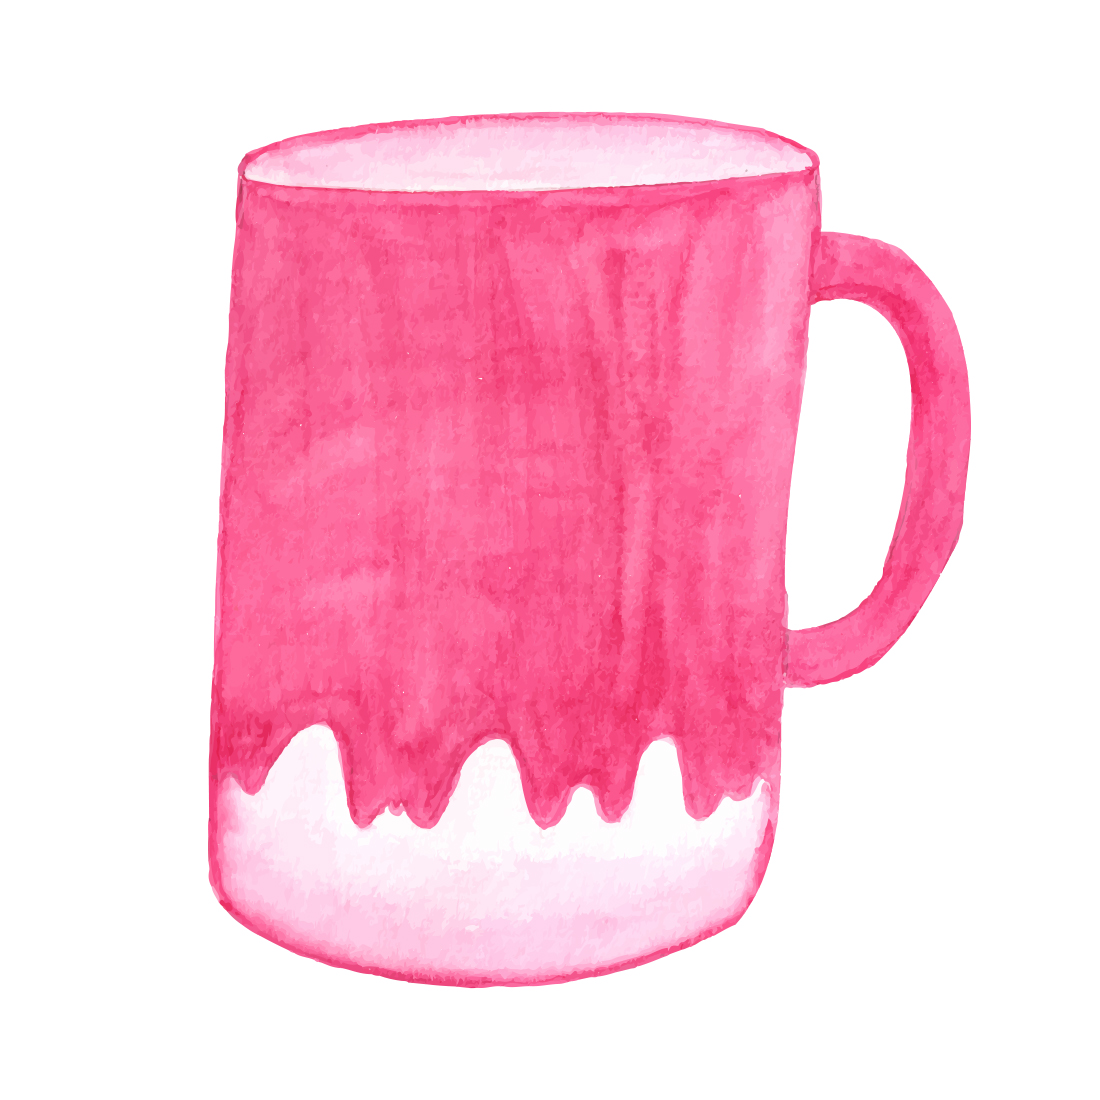 Big pink watercolor mug.